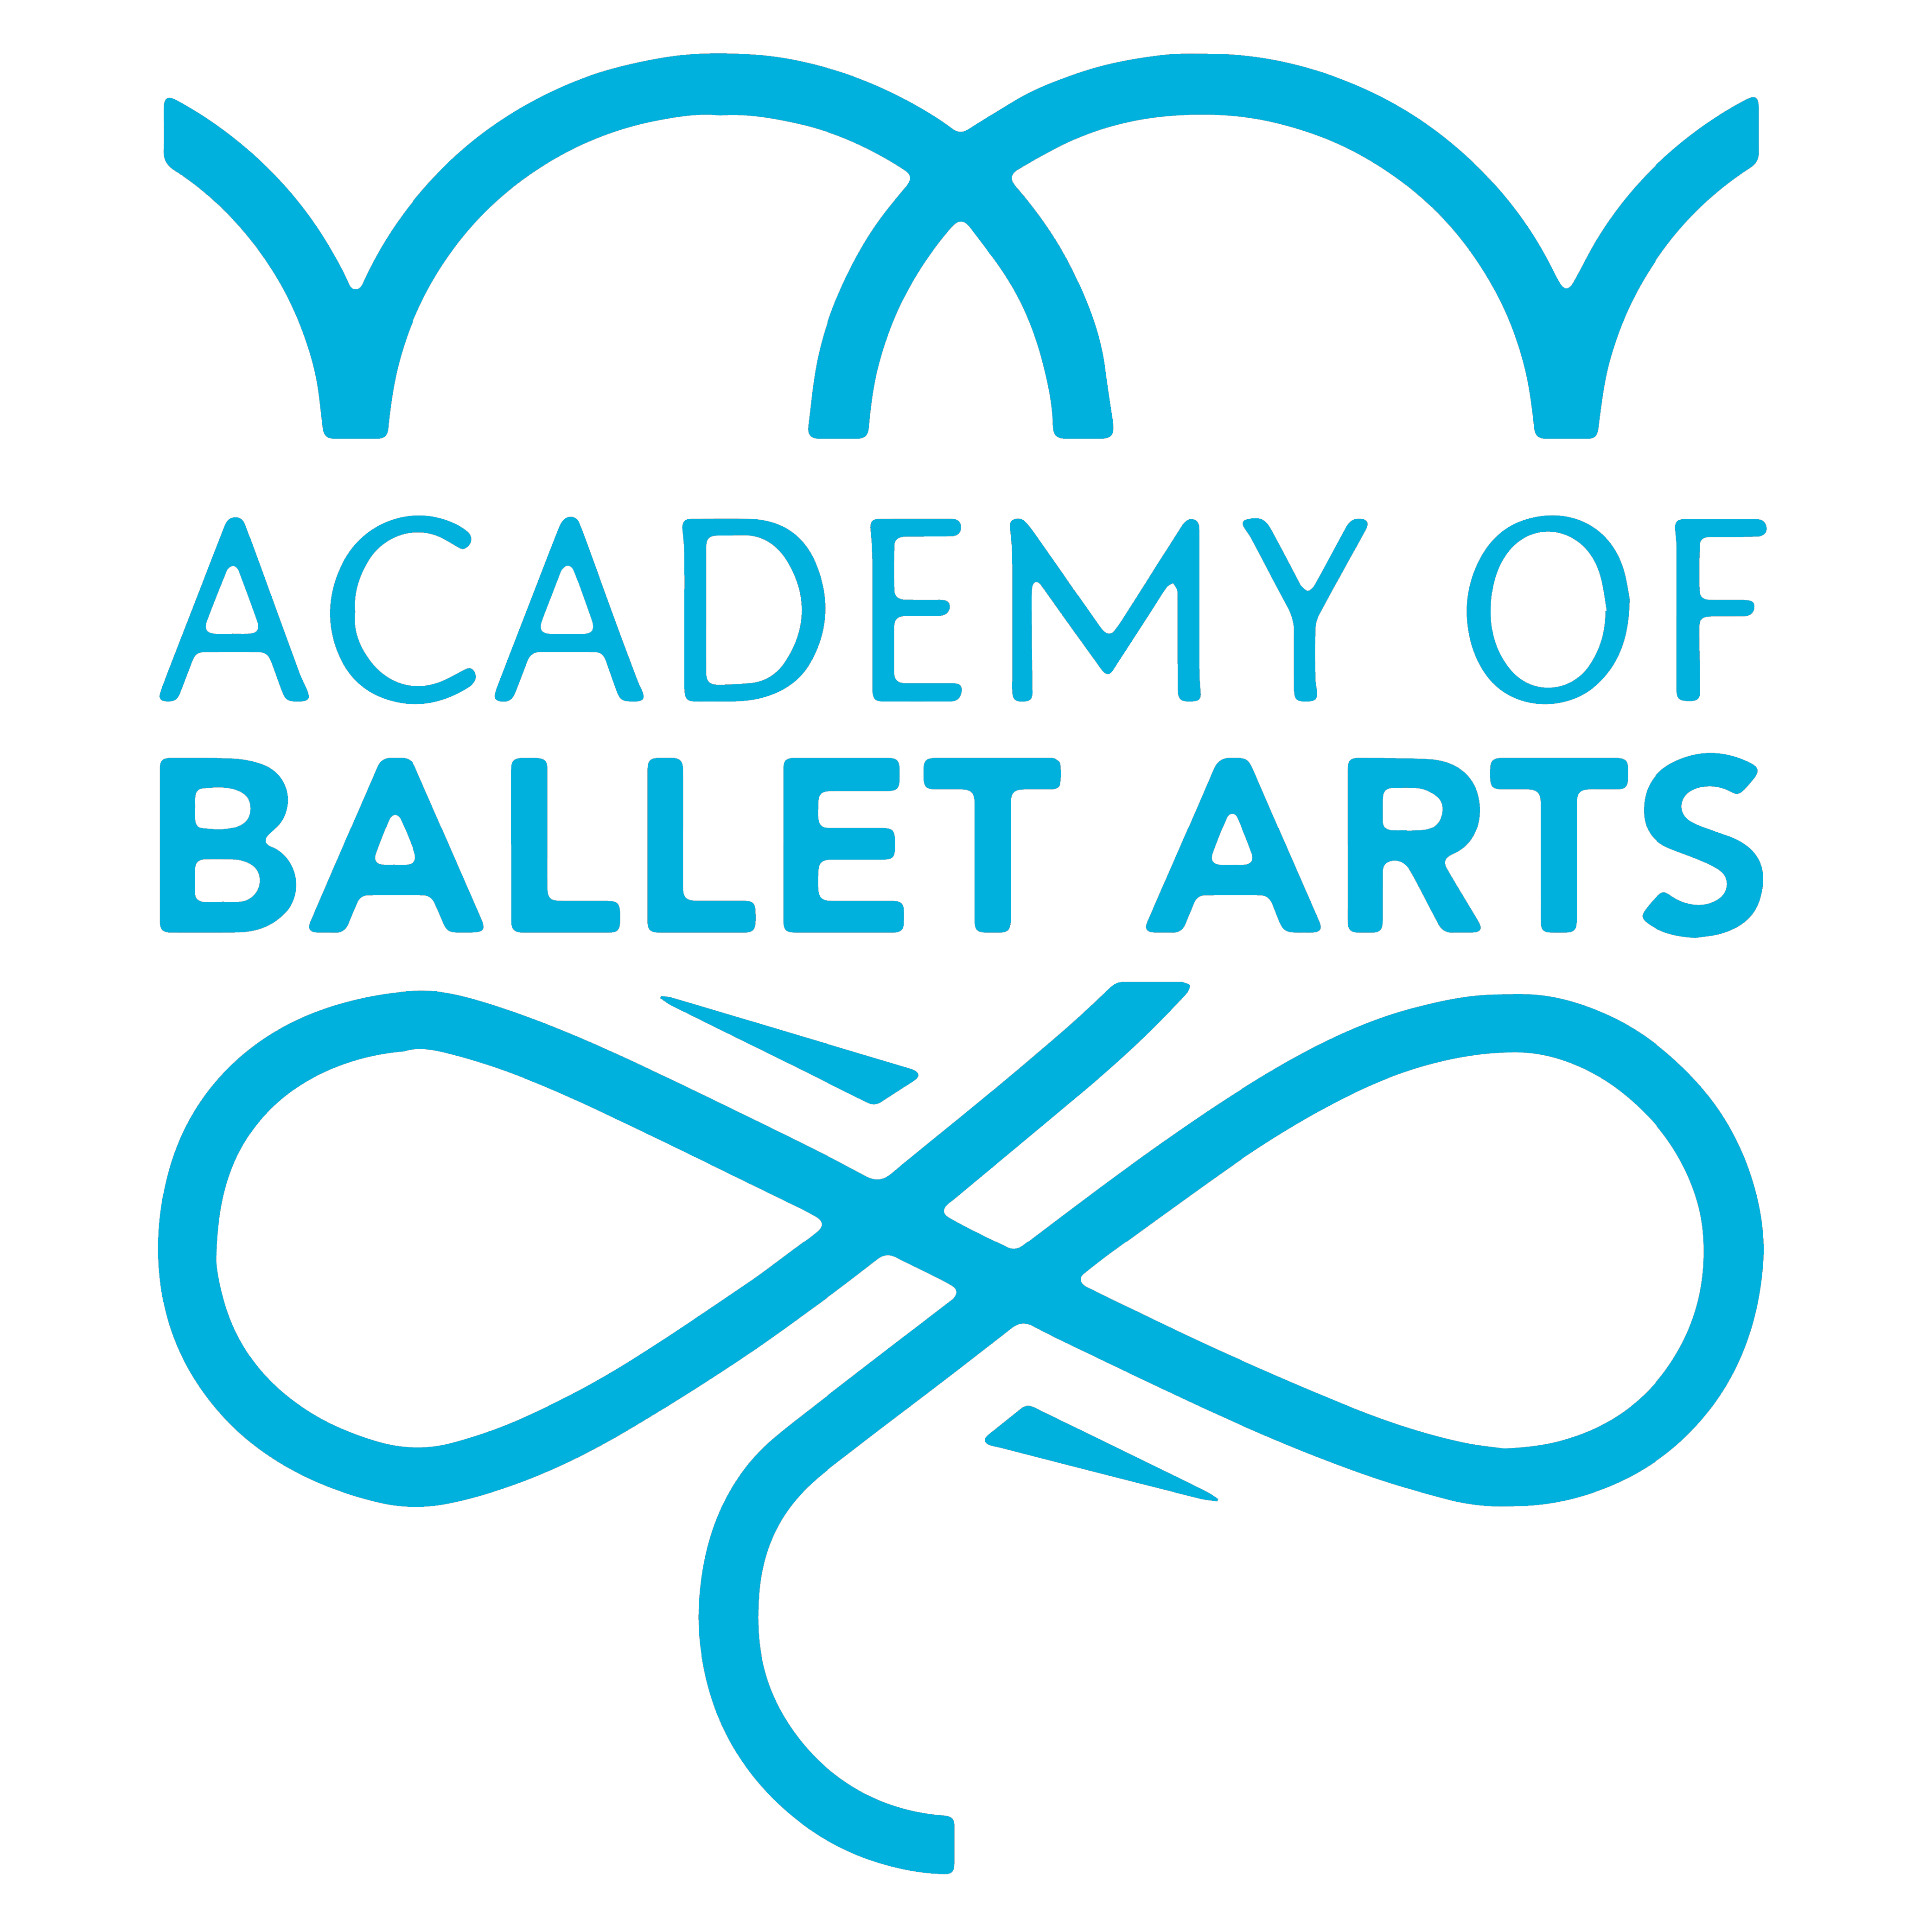 American Ballet Academy